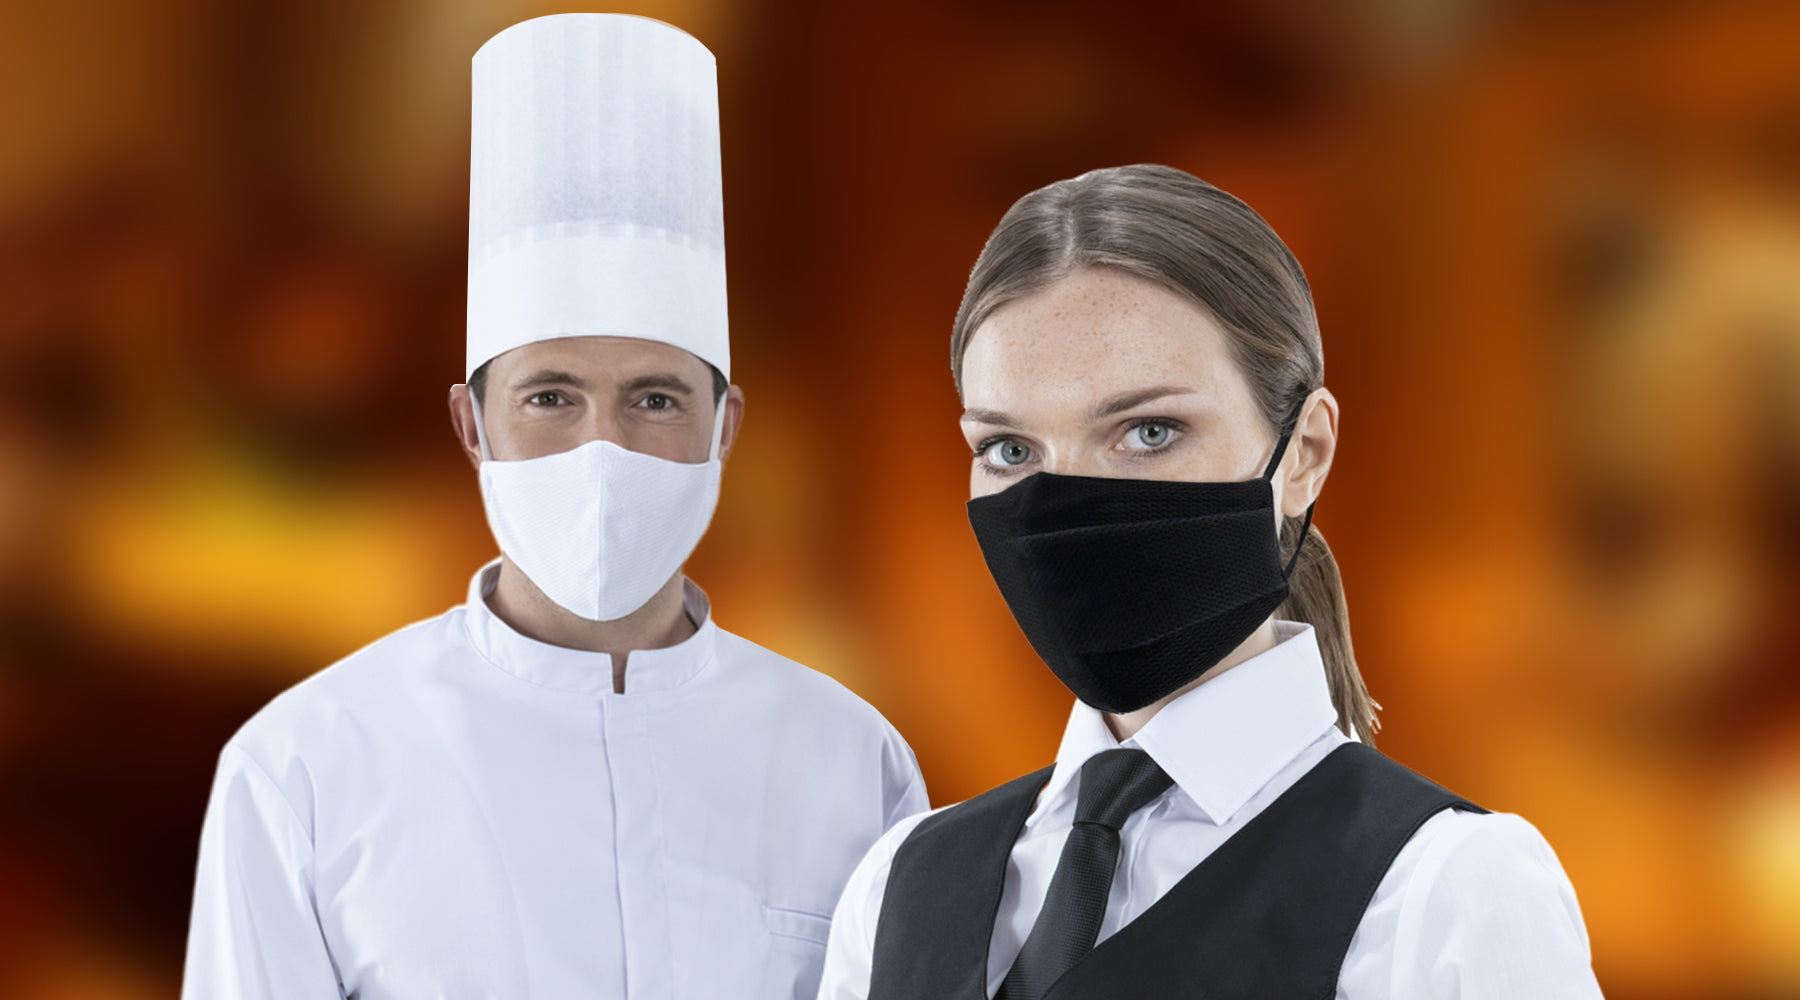 Restaurant Face Masks